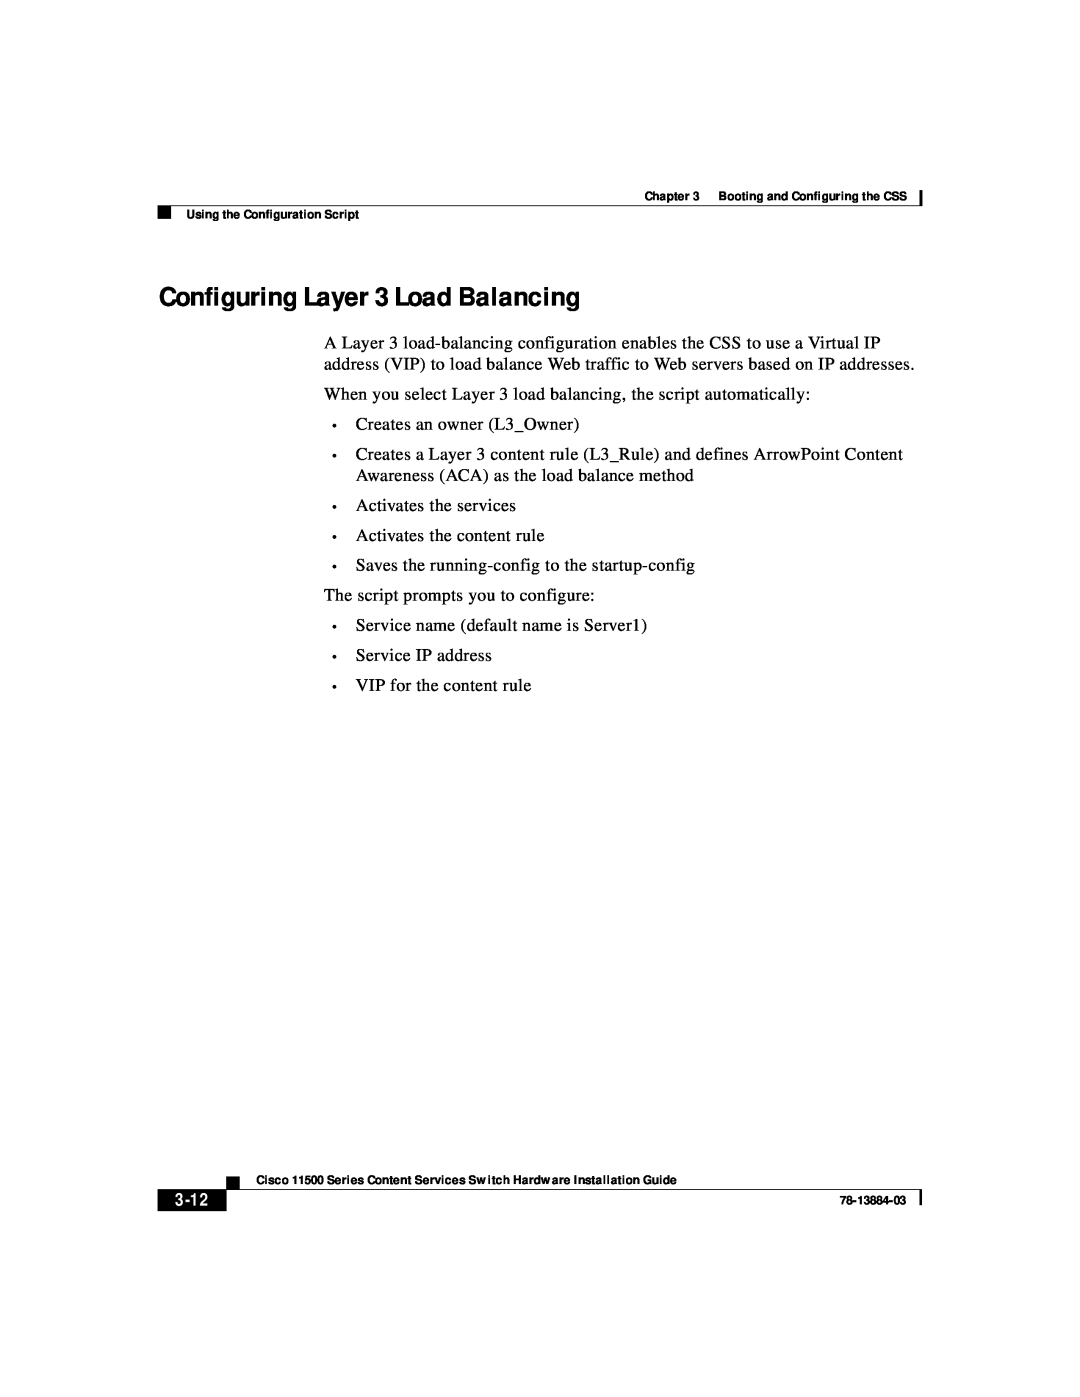 Cisco Systems 11500 Series manual Configuring Layer 3 Load Balancing, 3-12 